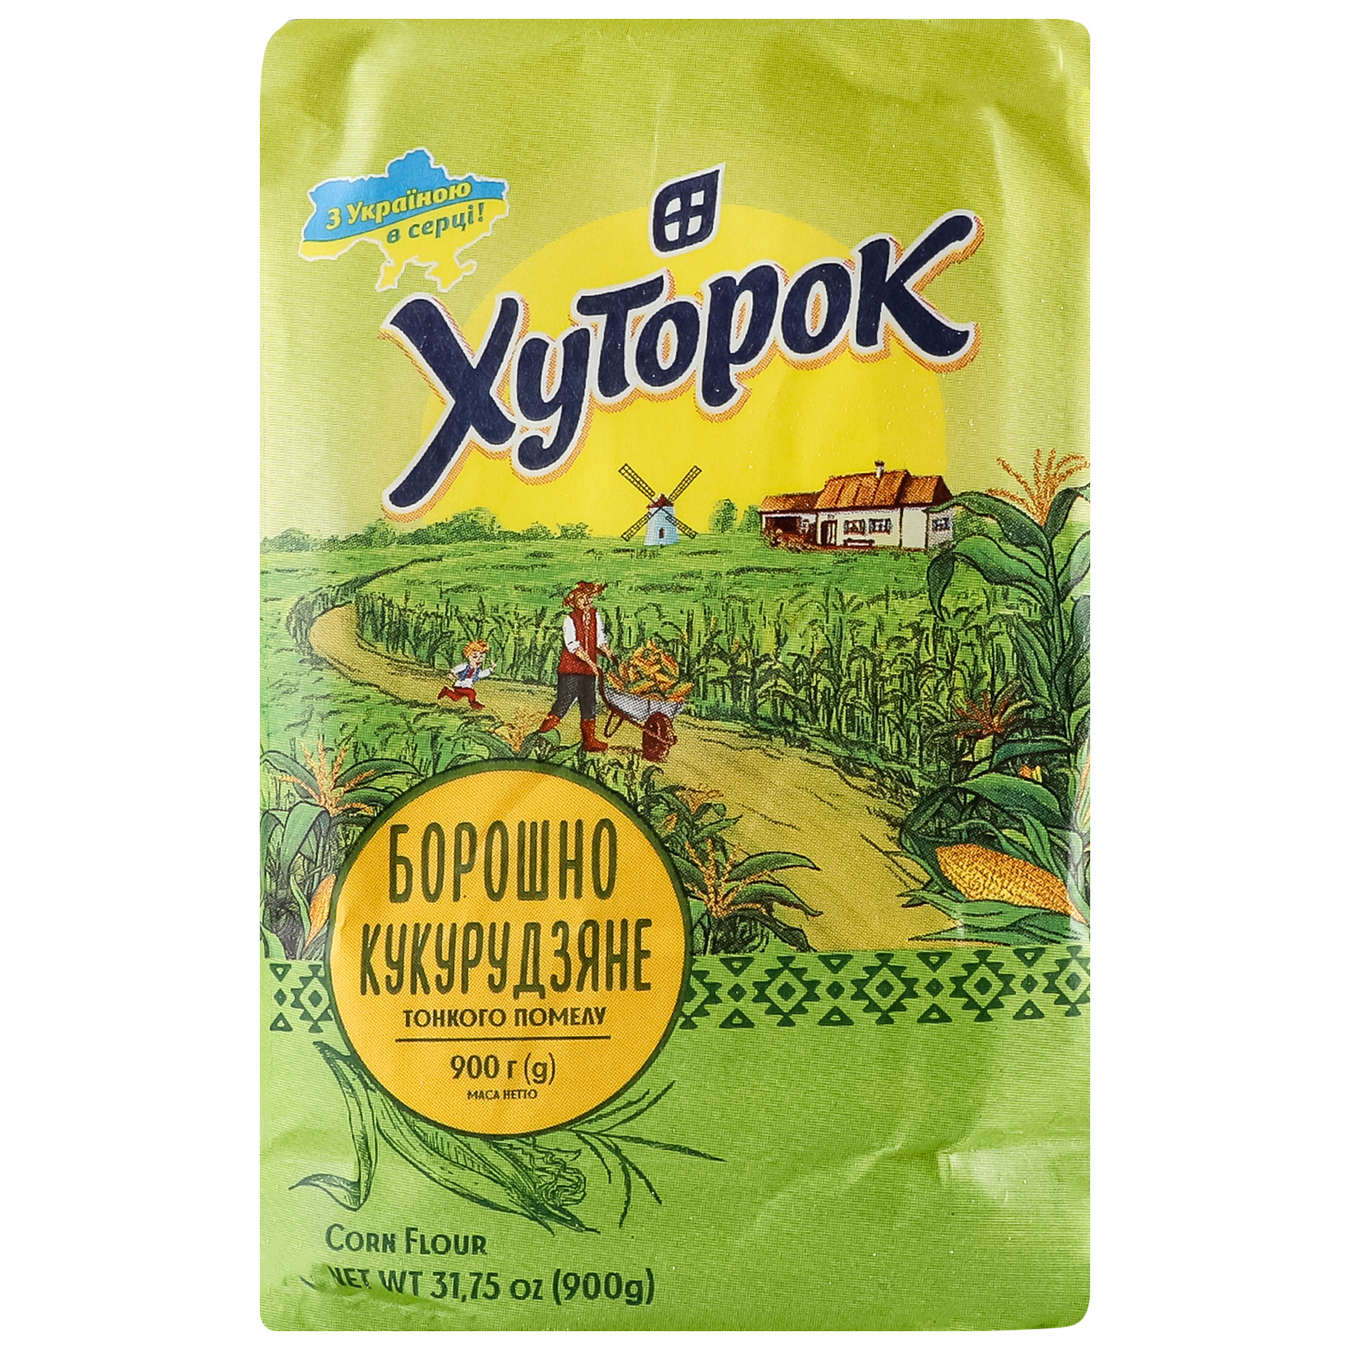 Khutorok corn flour 900g